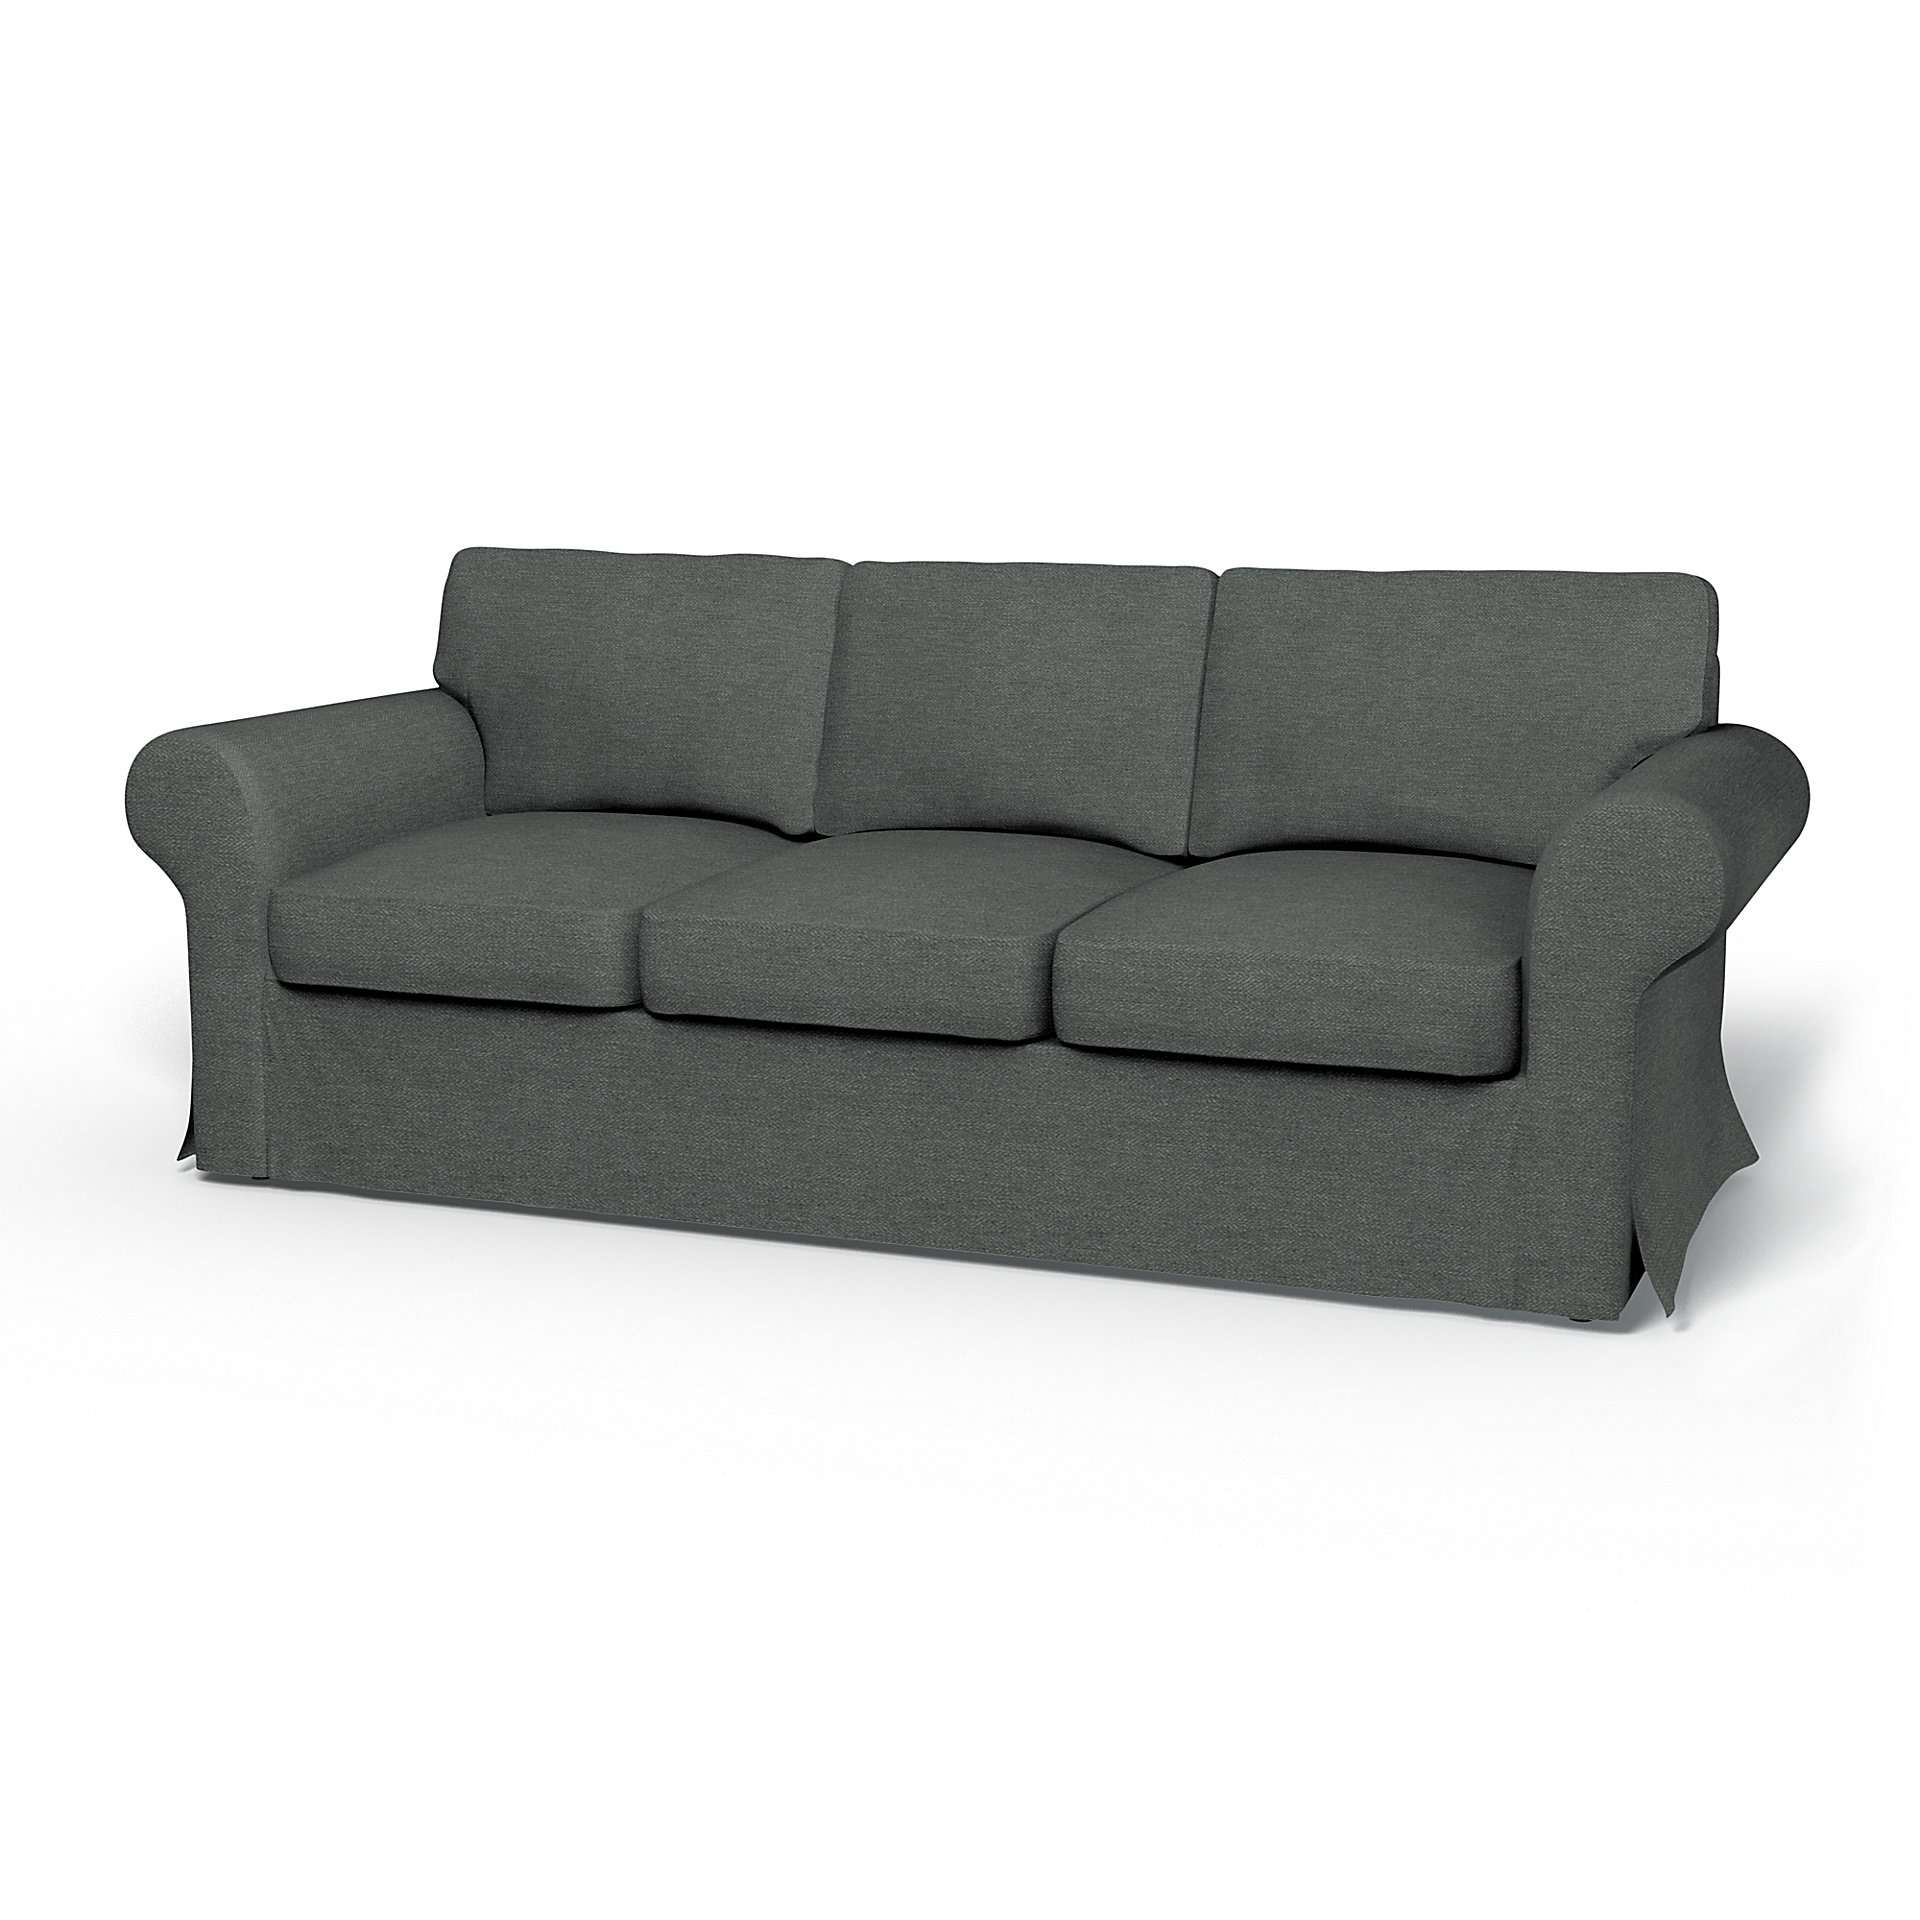 IKEA - Ektorp 3 Seater Sofa Bed Cover, Laurel, Boucle & Texture - Bemz